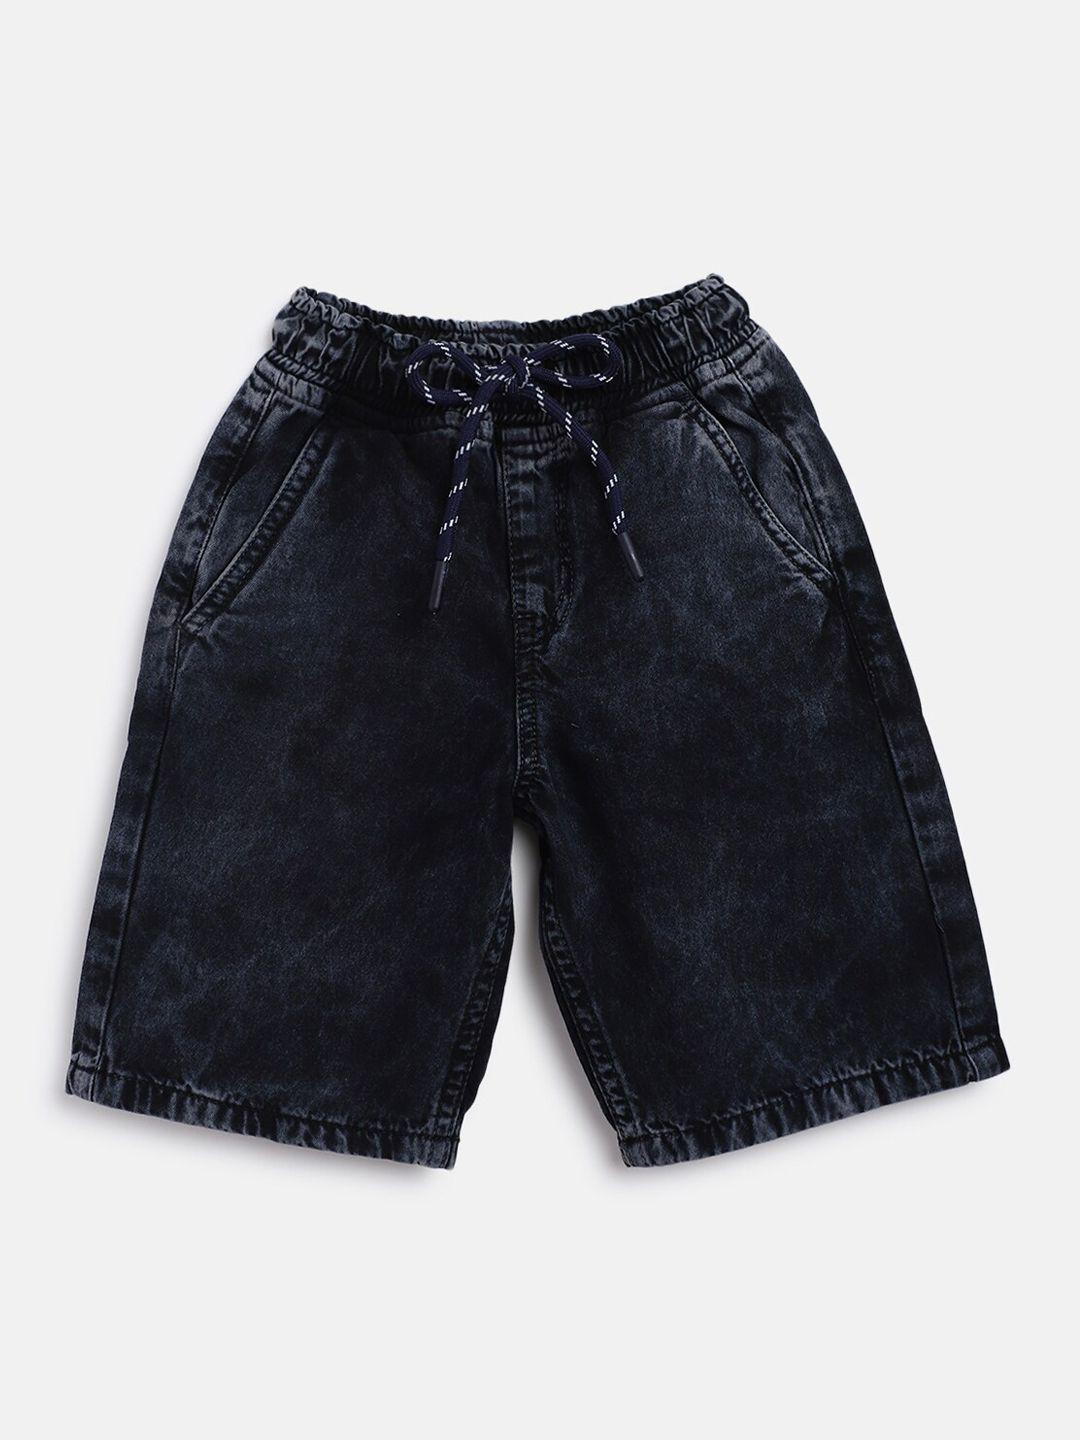 tales & stories boys black outdoor denim cotton shorts